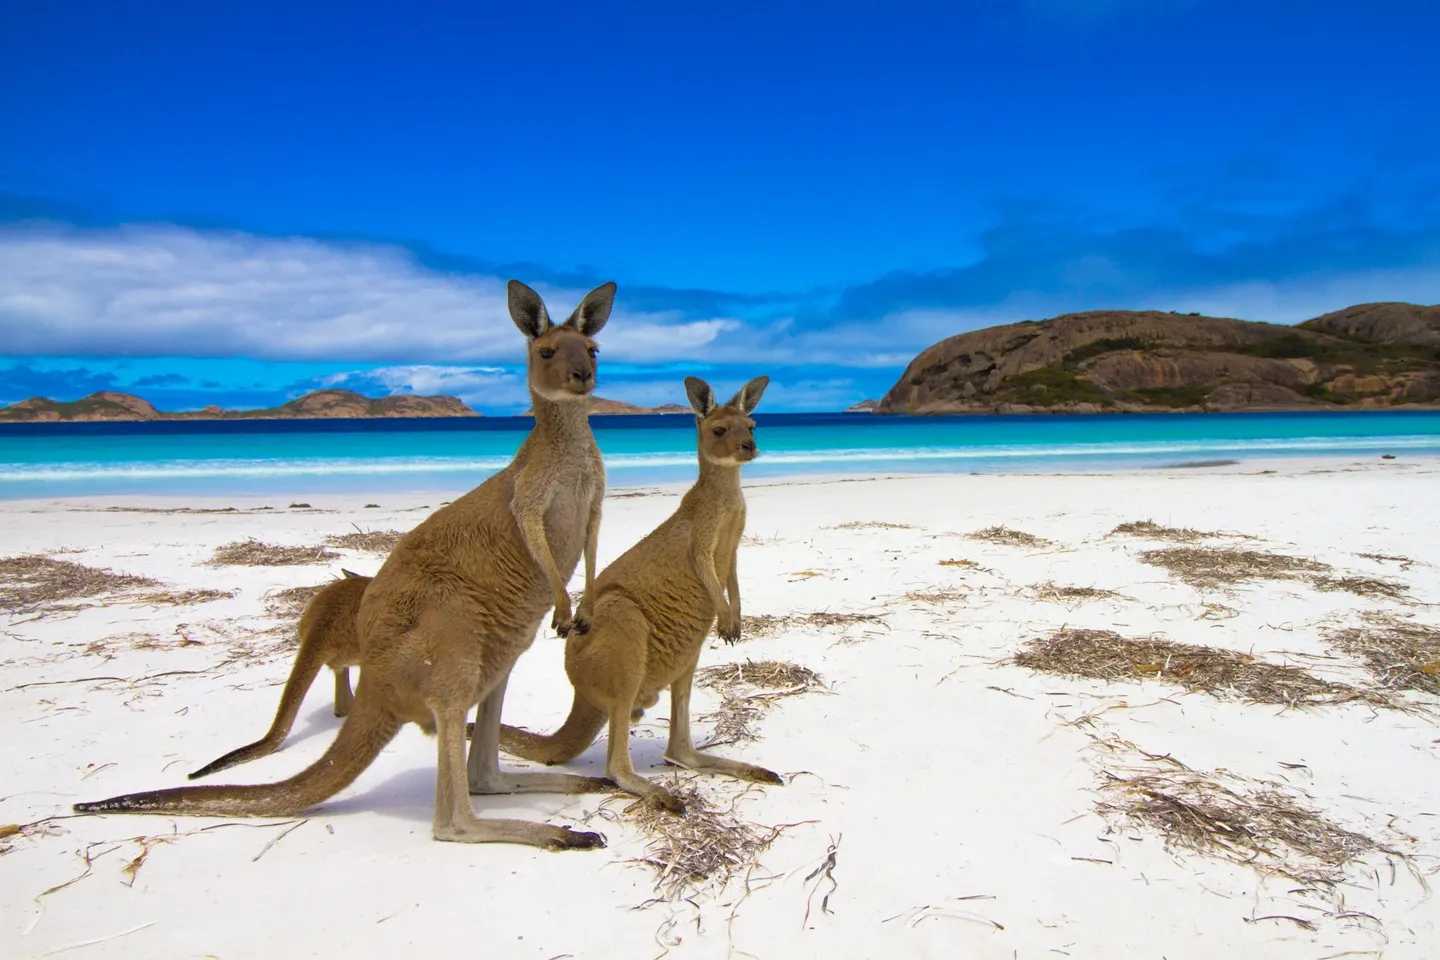 Australia: The Adventure Down Under